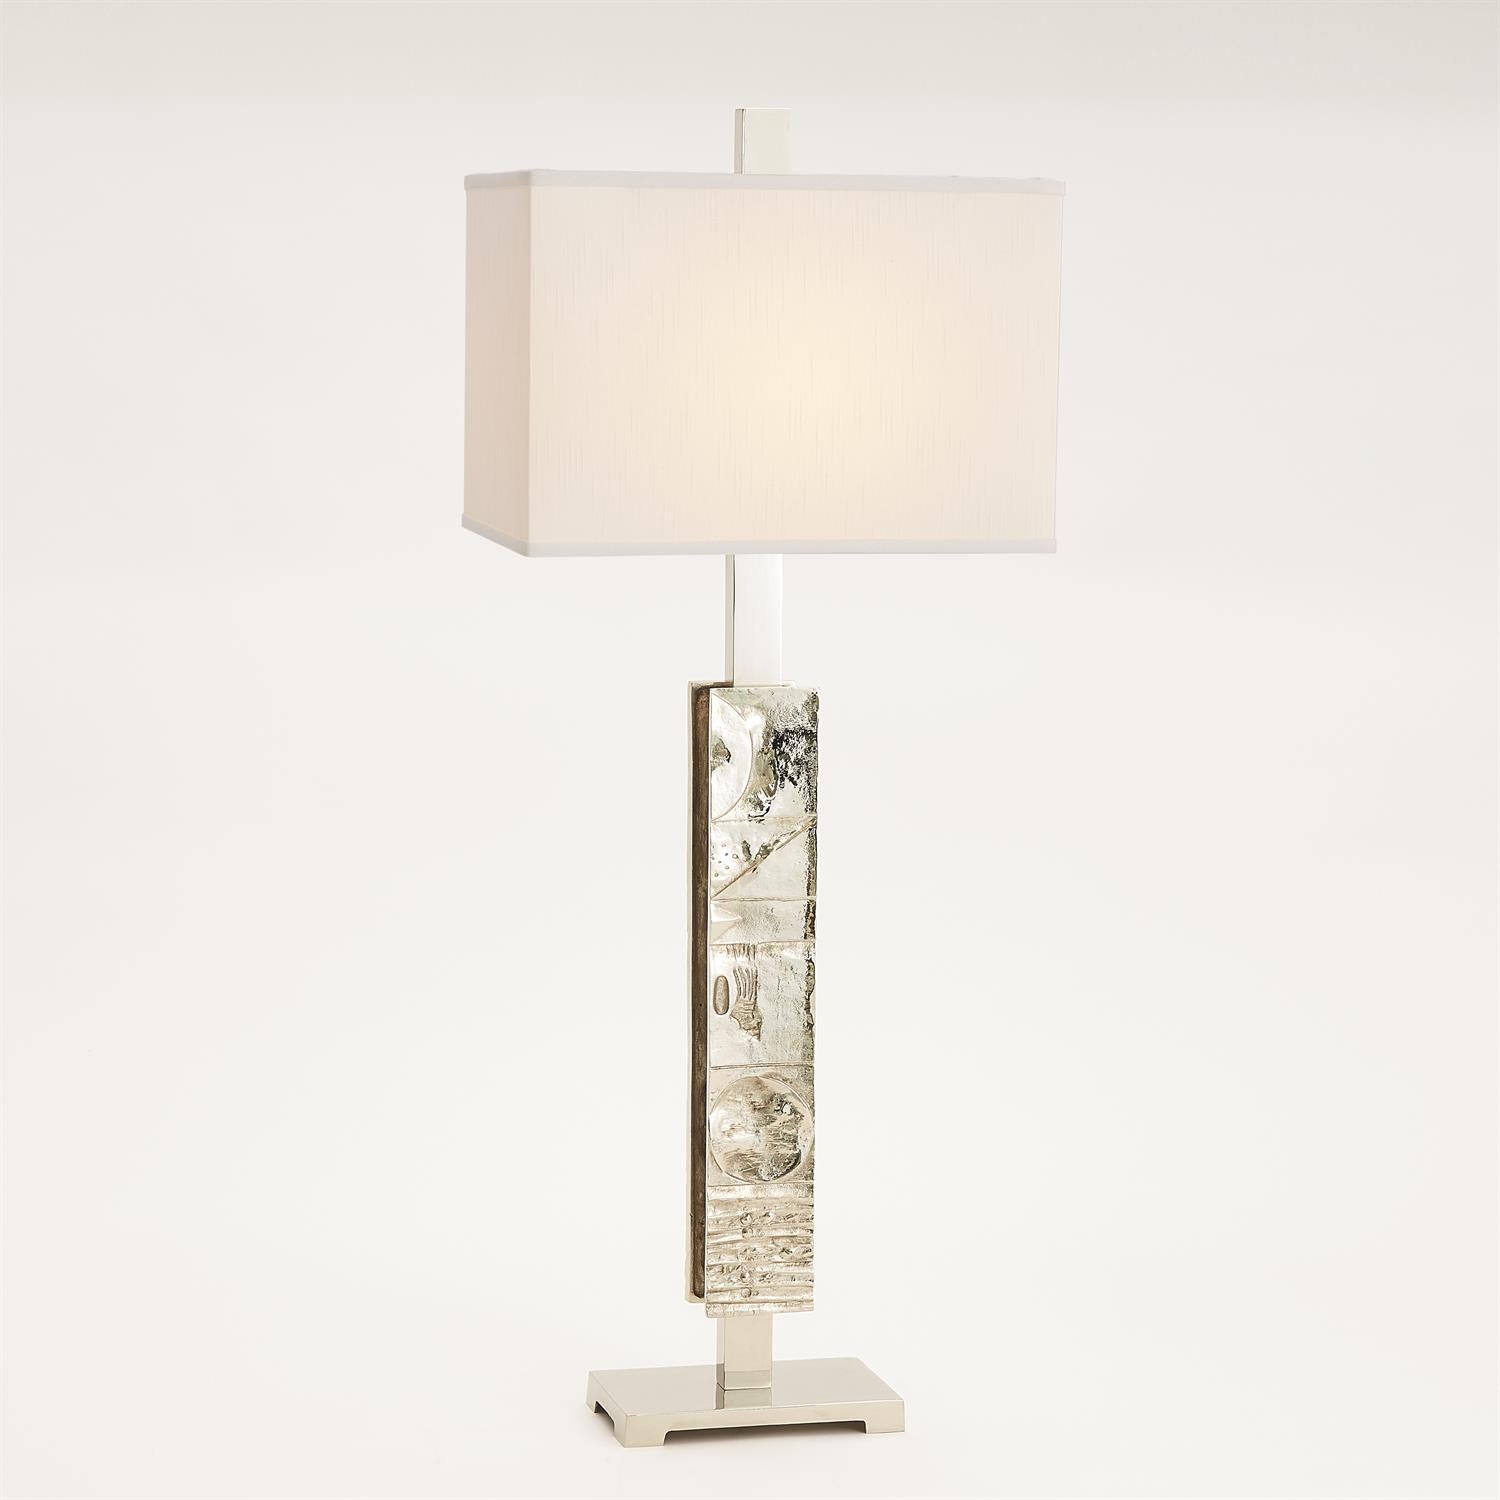 Pimlico Table Lamp - Nickel - Grats Decor Interior Design & Build Inc.